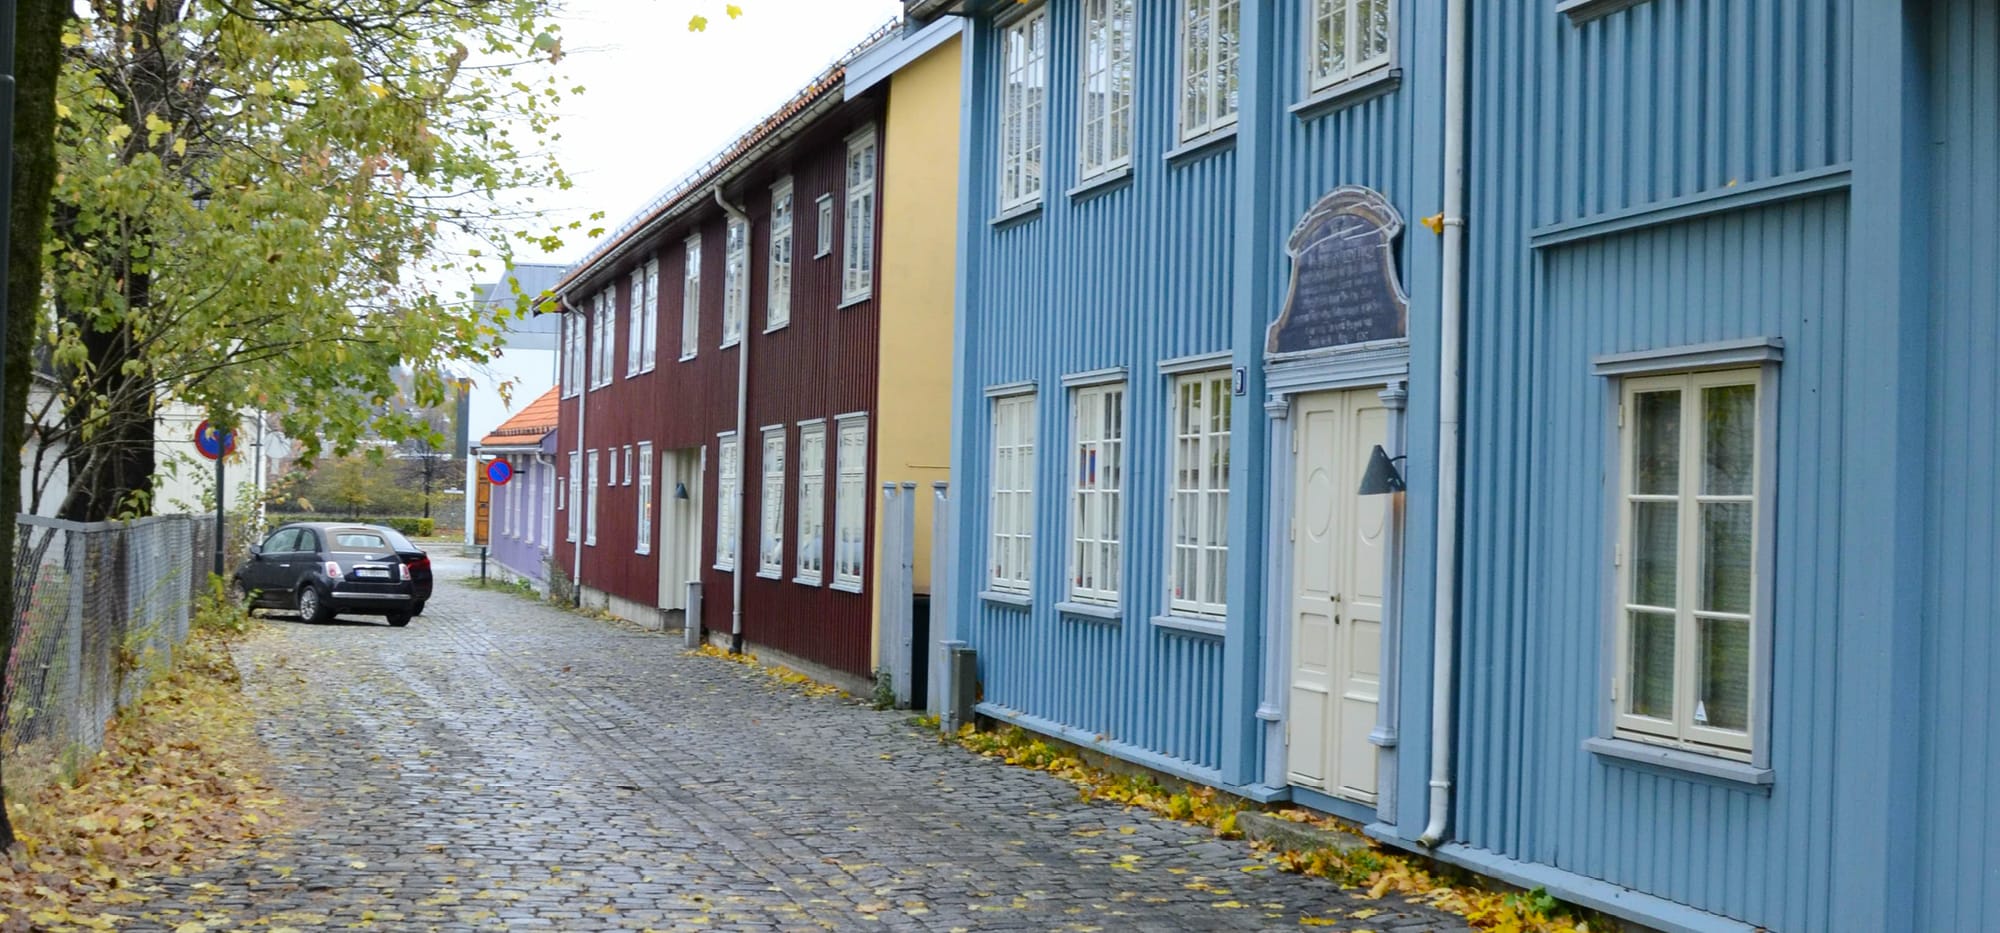 Boligmiljø i Drammen med ulike farger på husene.